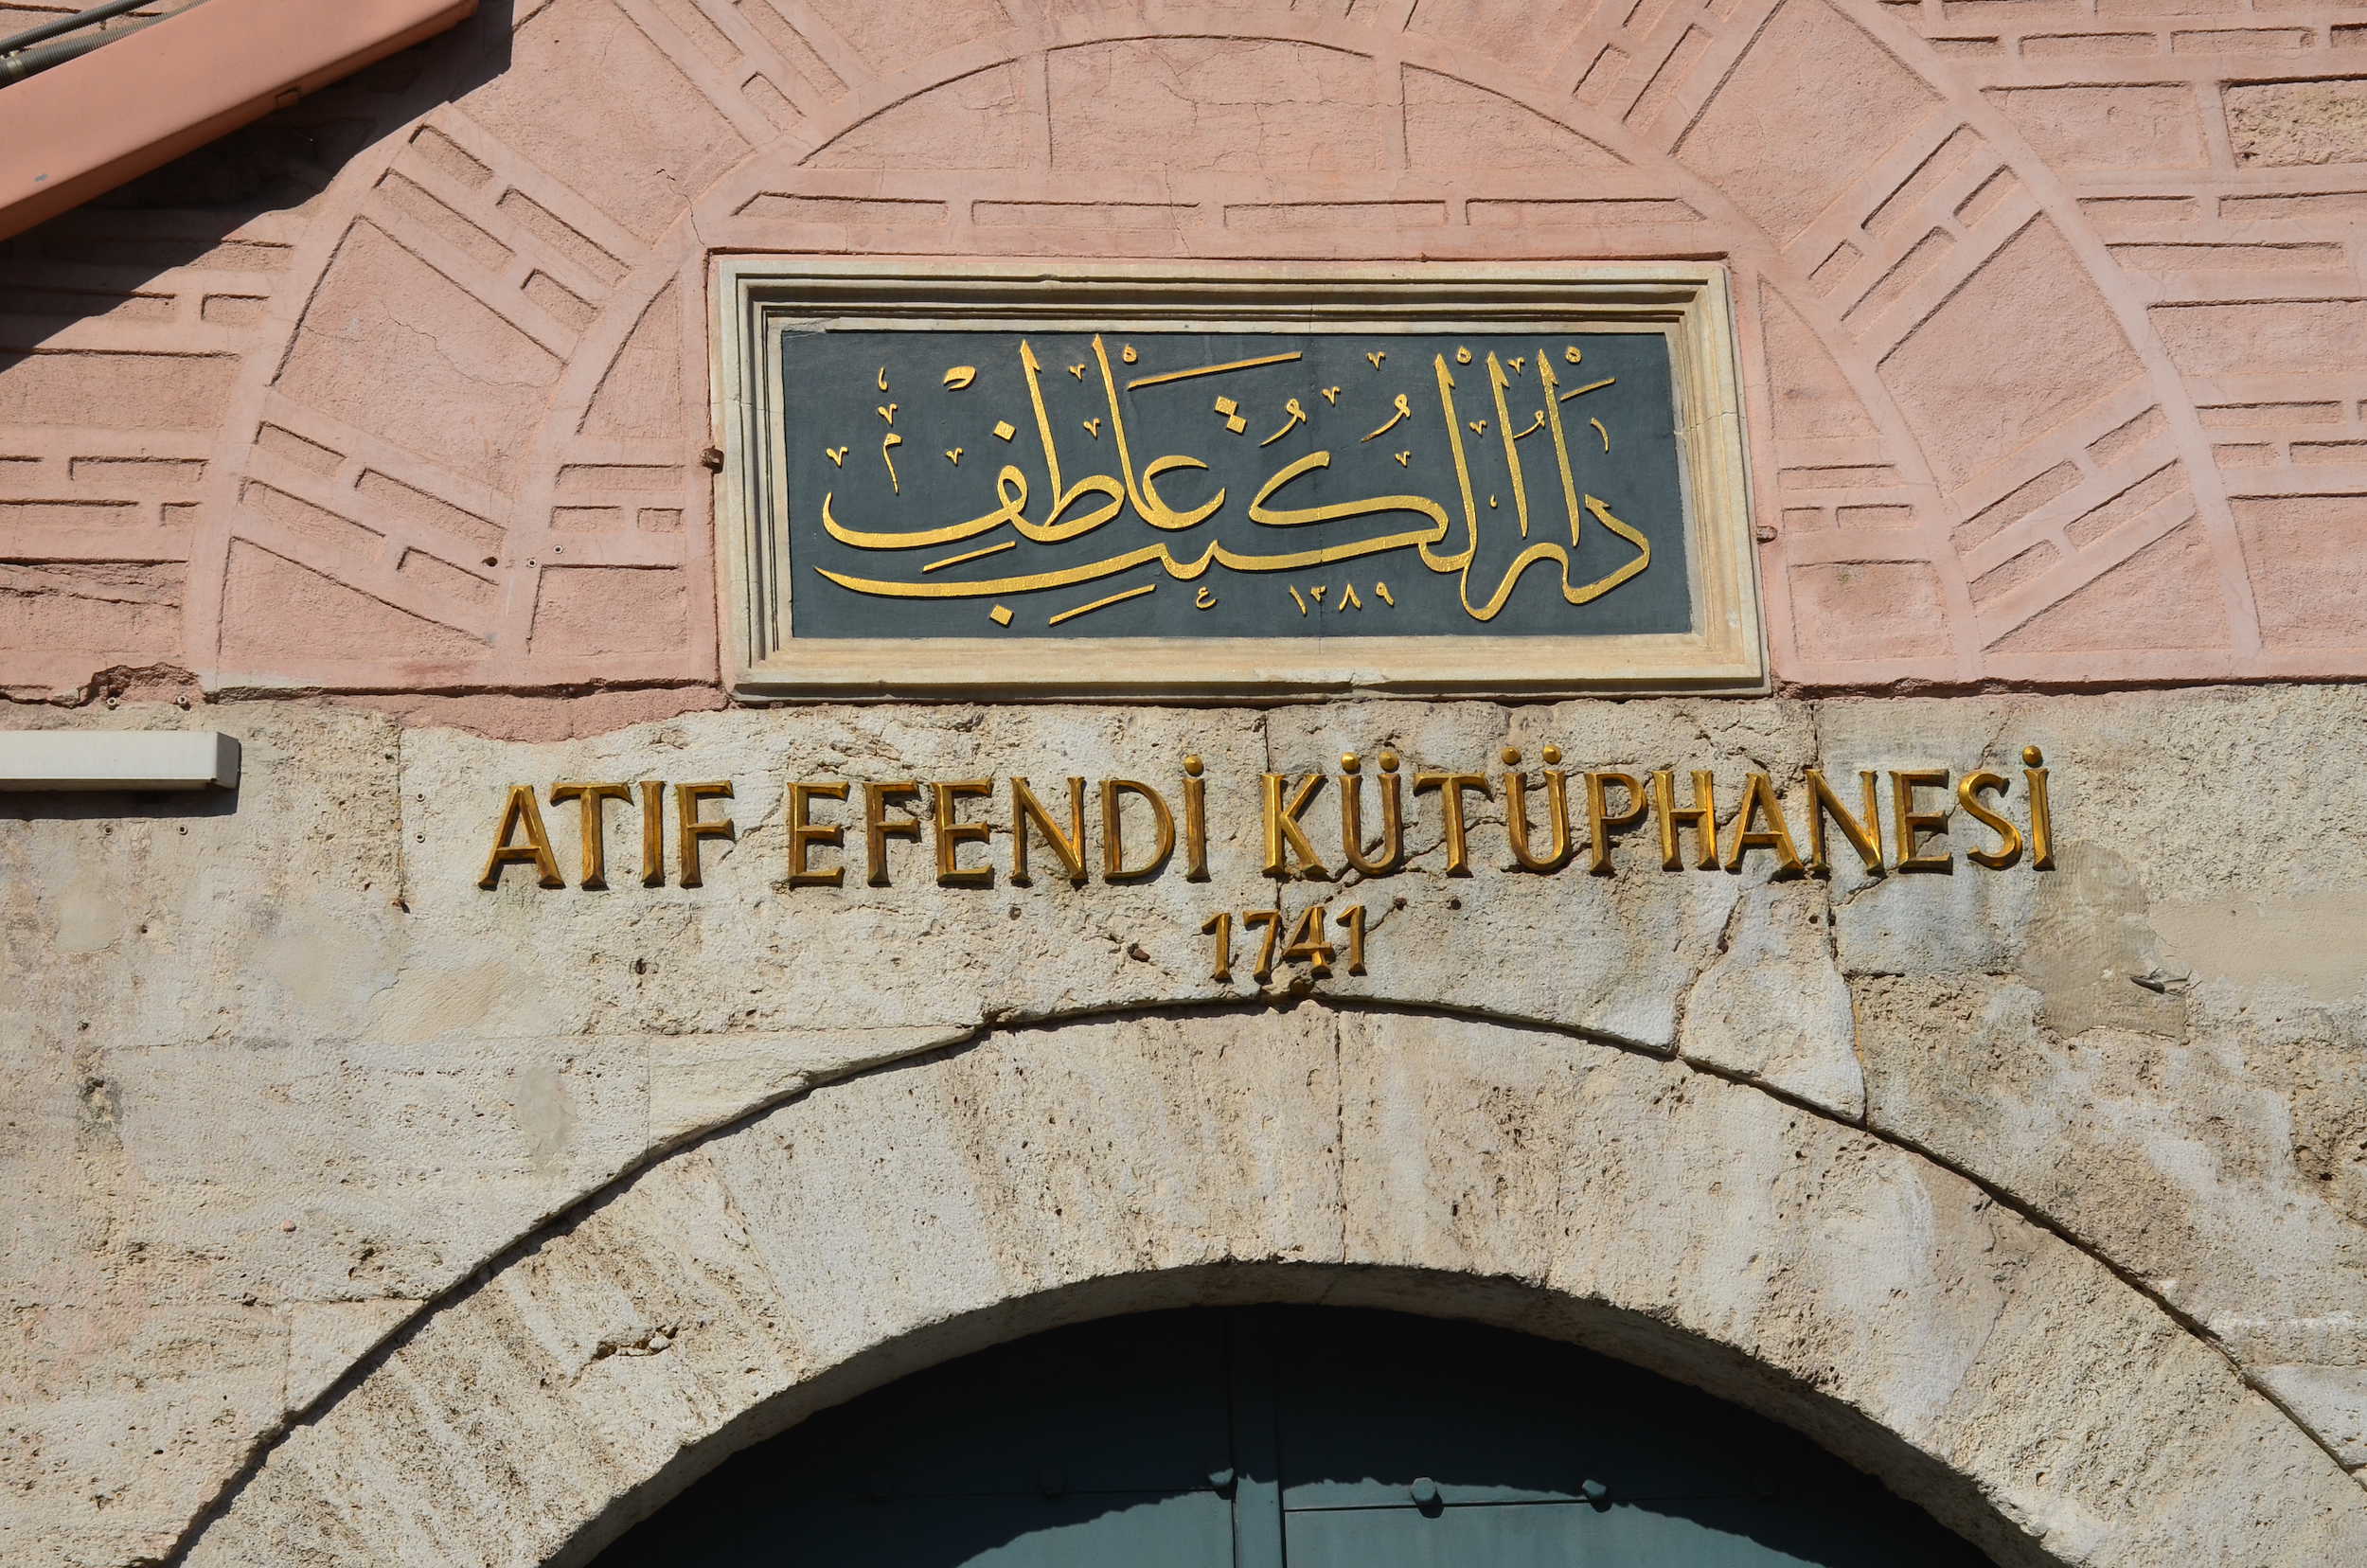 Atıf Efendi Library in Vefa, Istanbul, Turkey